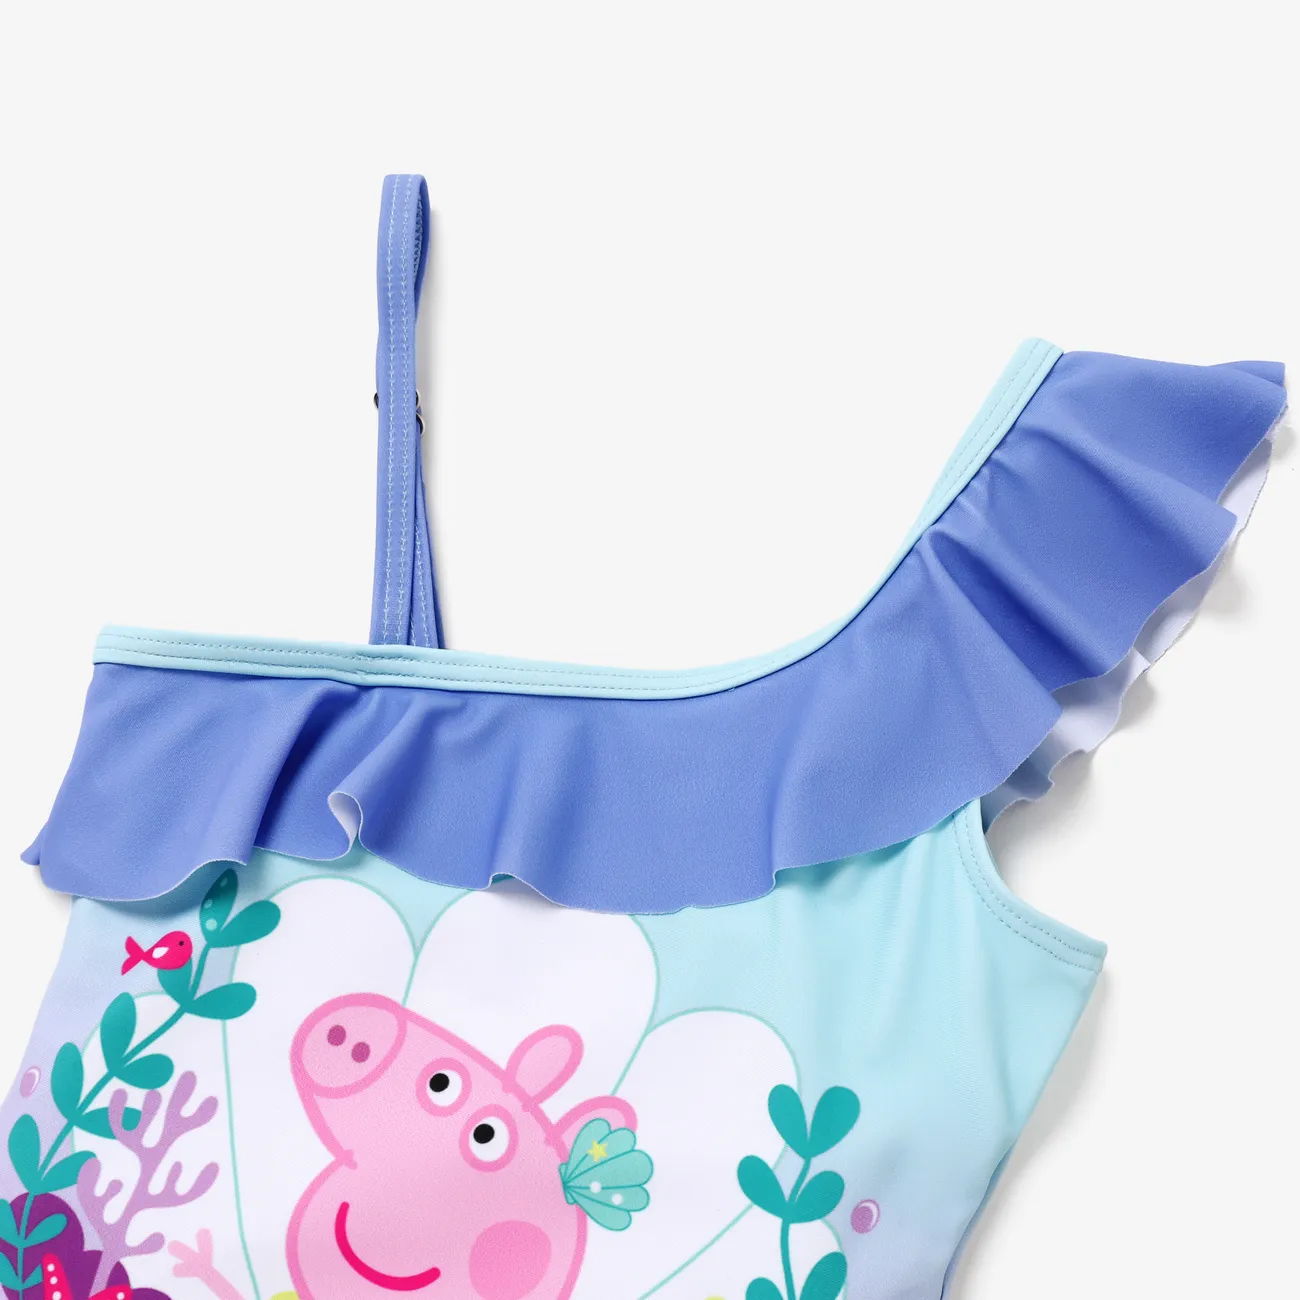 Peppa Pig Toddler/Kid Girl Mermaid Swimming suit Light Purple big image 1